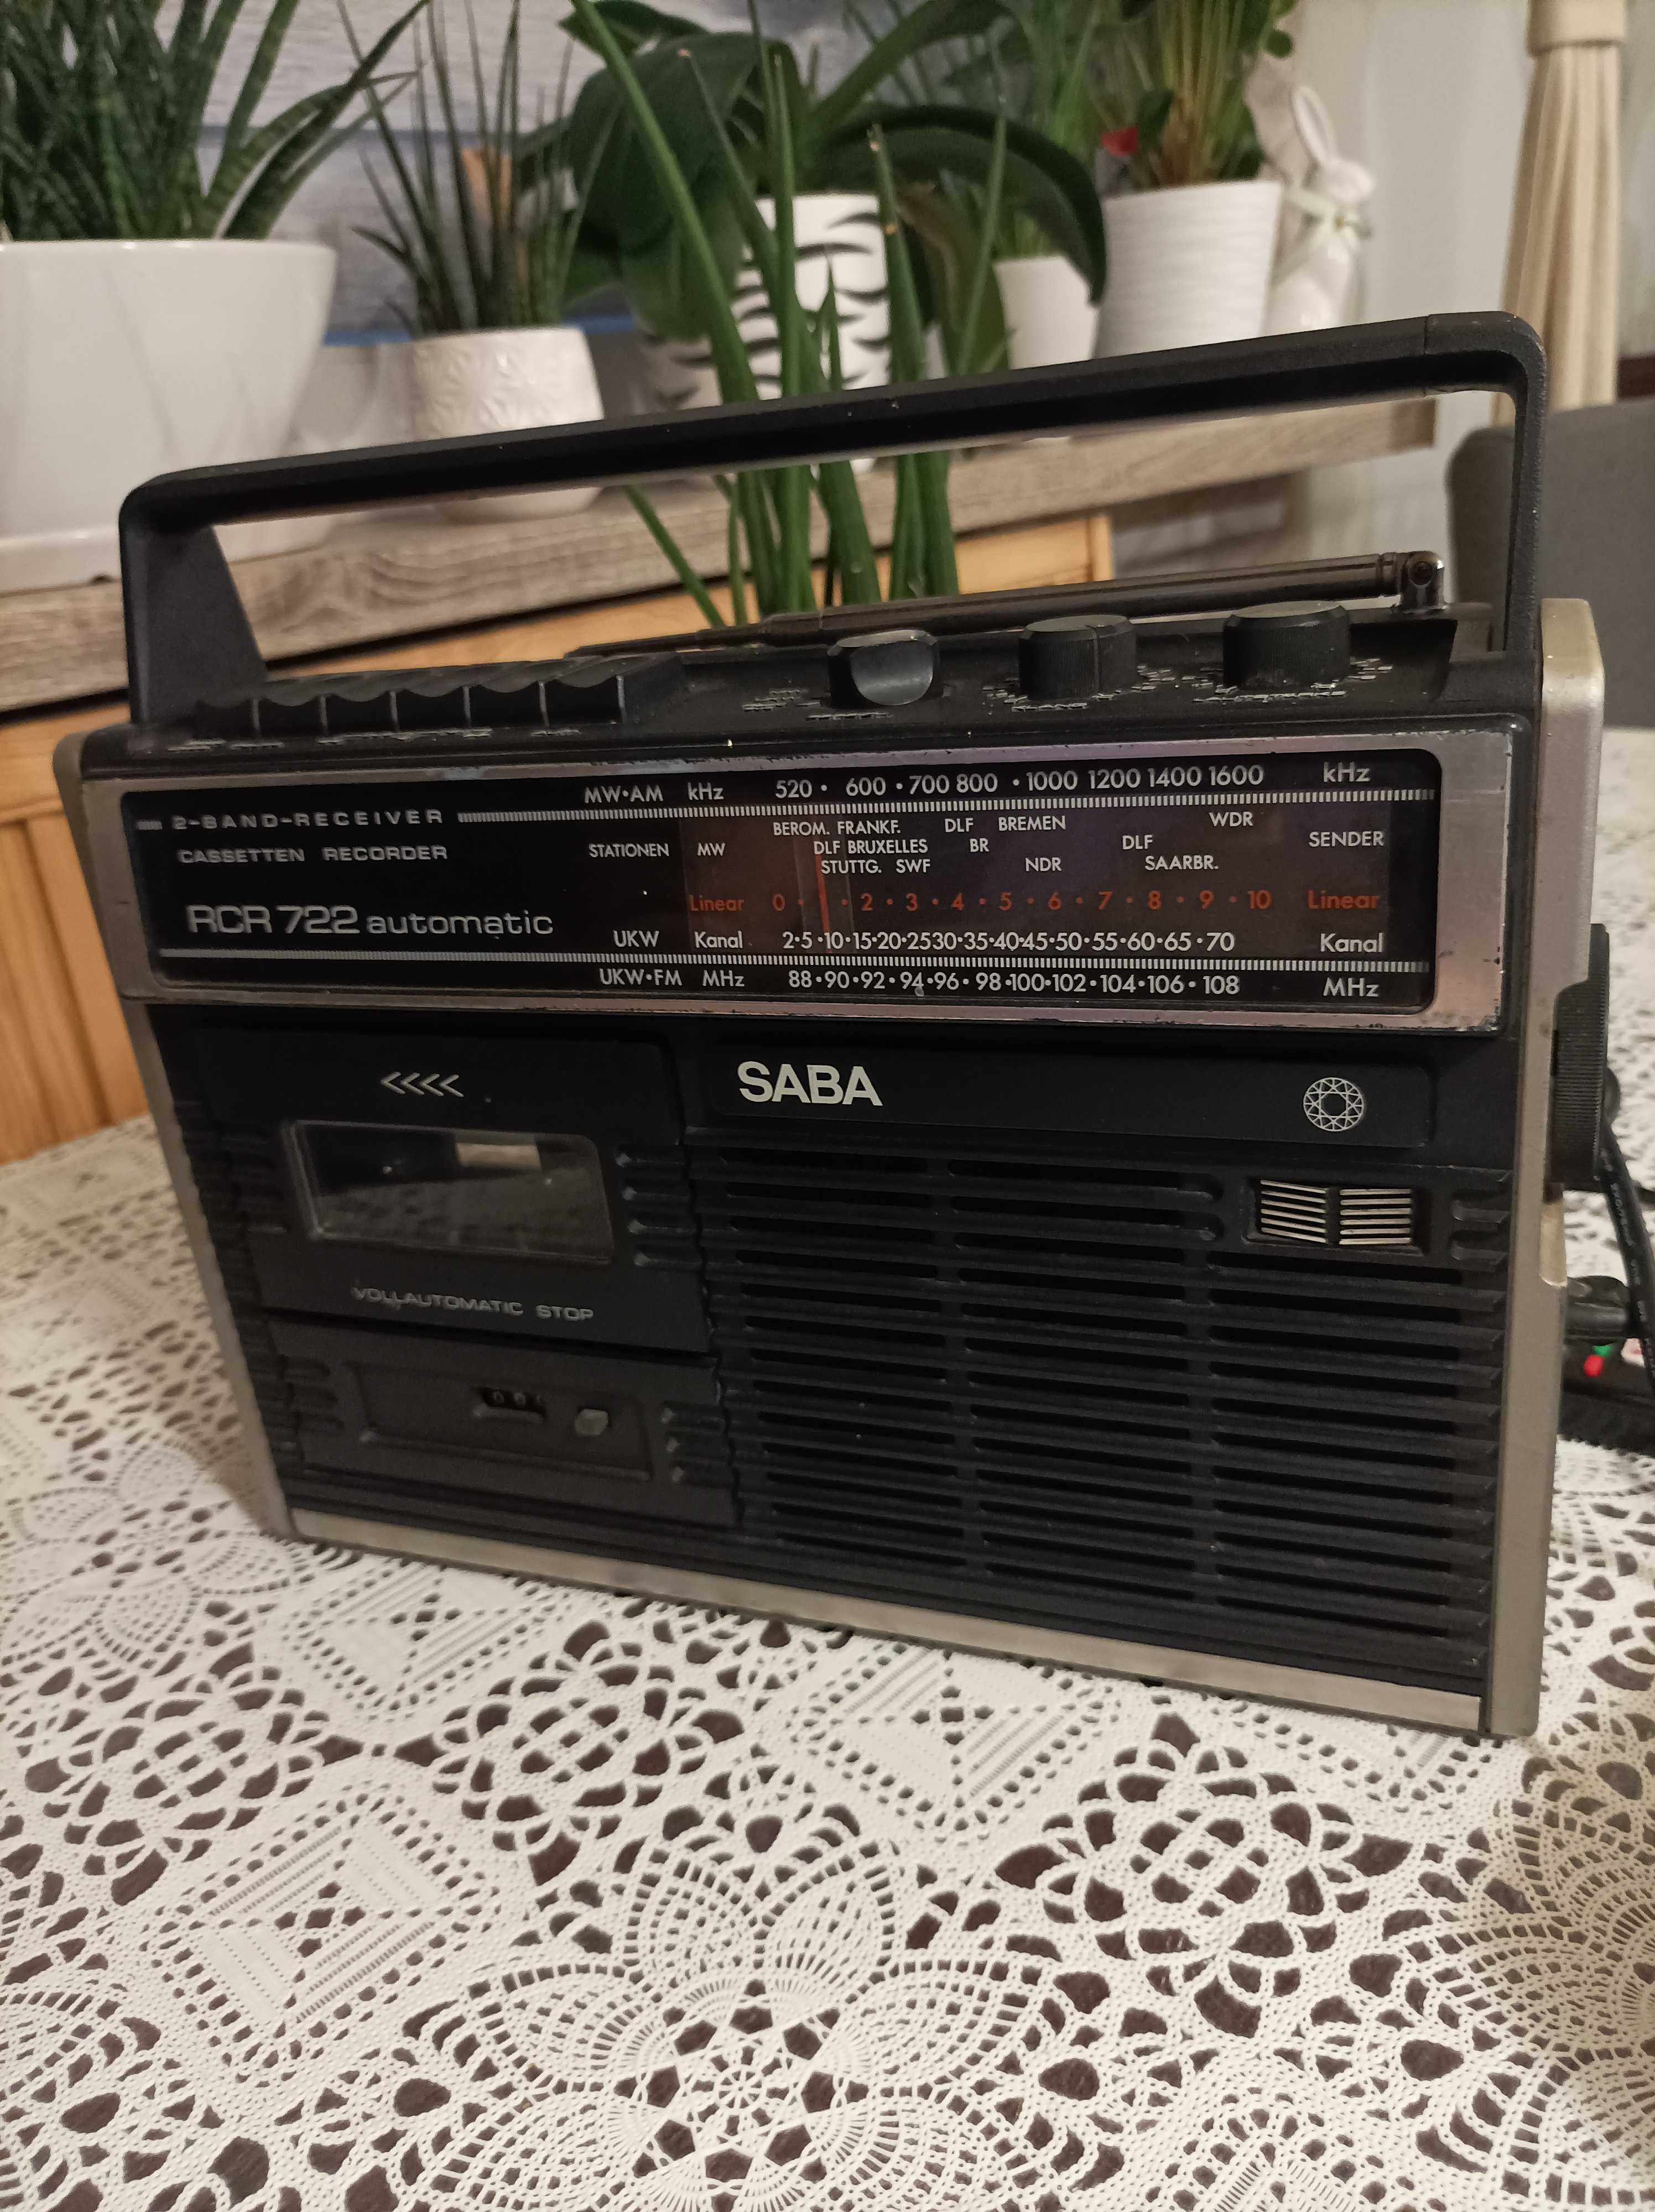 Saba RCR 722 automatic radiomagnetofon retro vintage